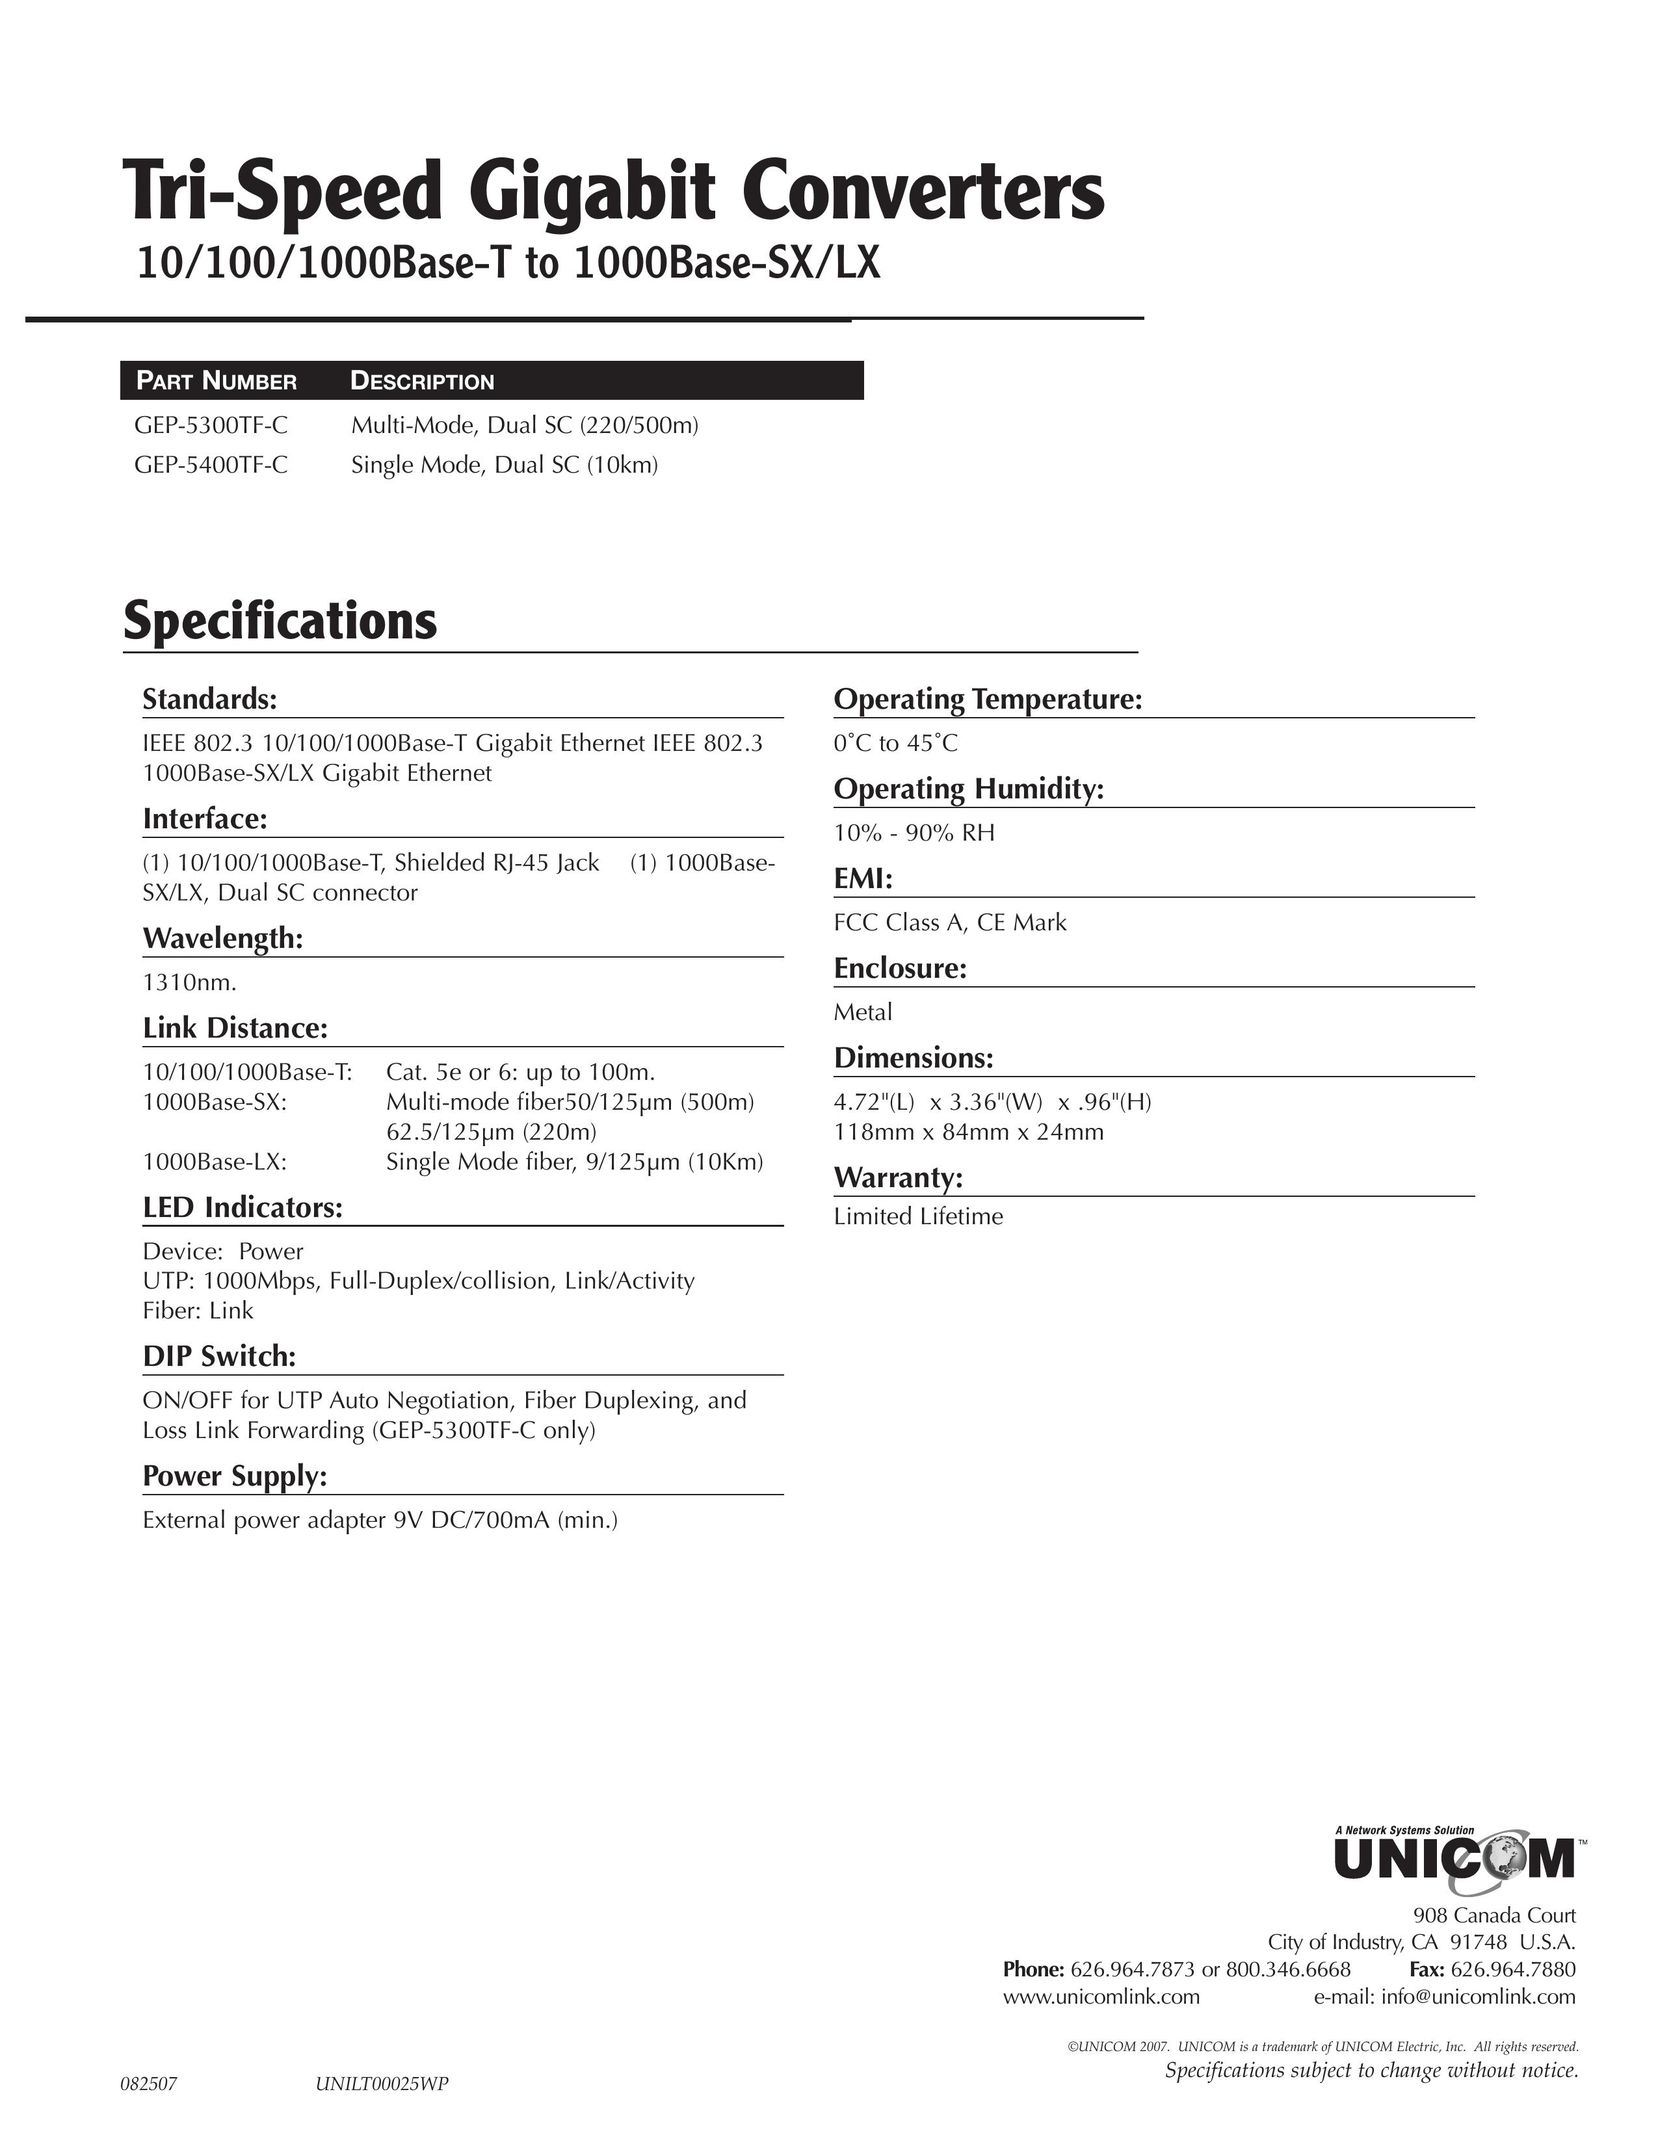 UNICOM Electric GEP-5400TF-C Network Card User Manual